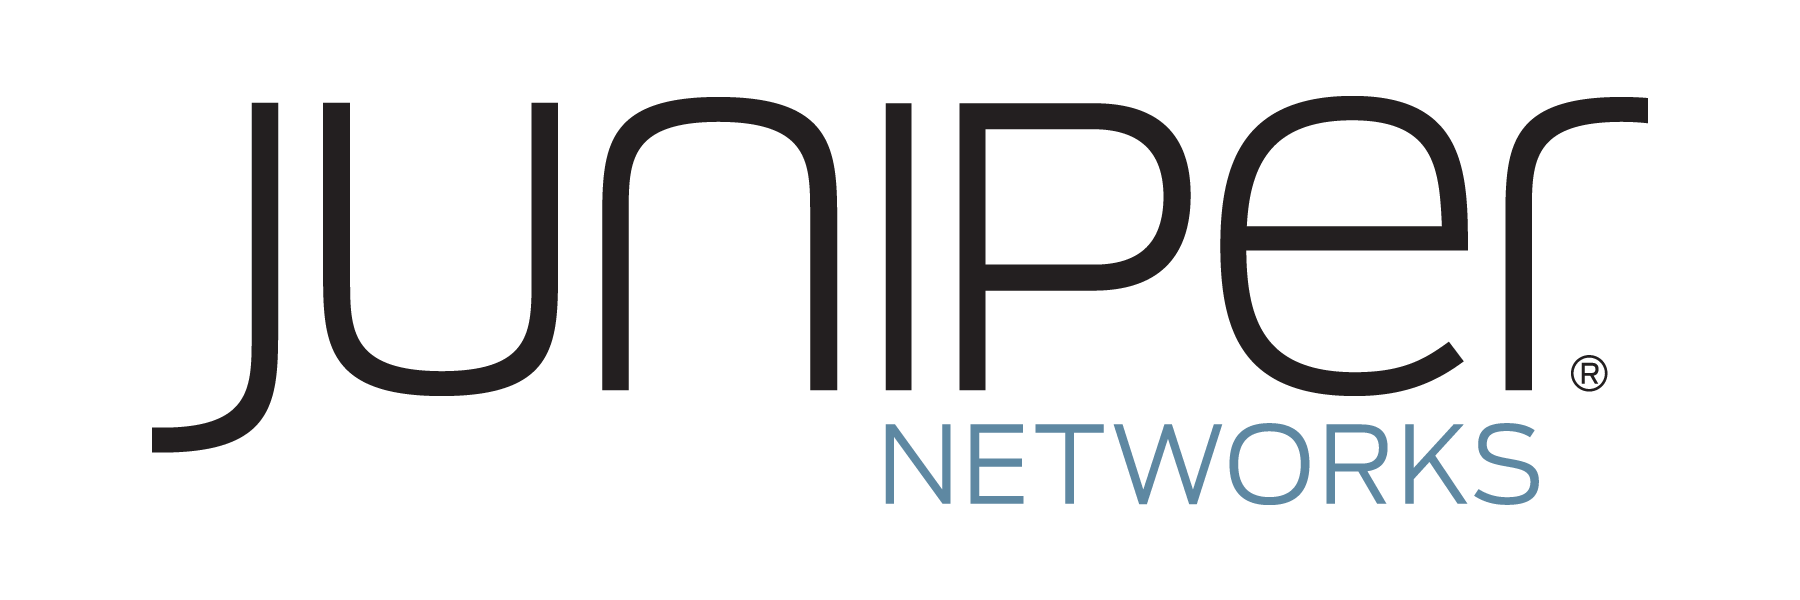 juniper-networks-jnpr-stock.png